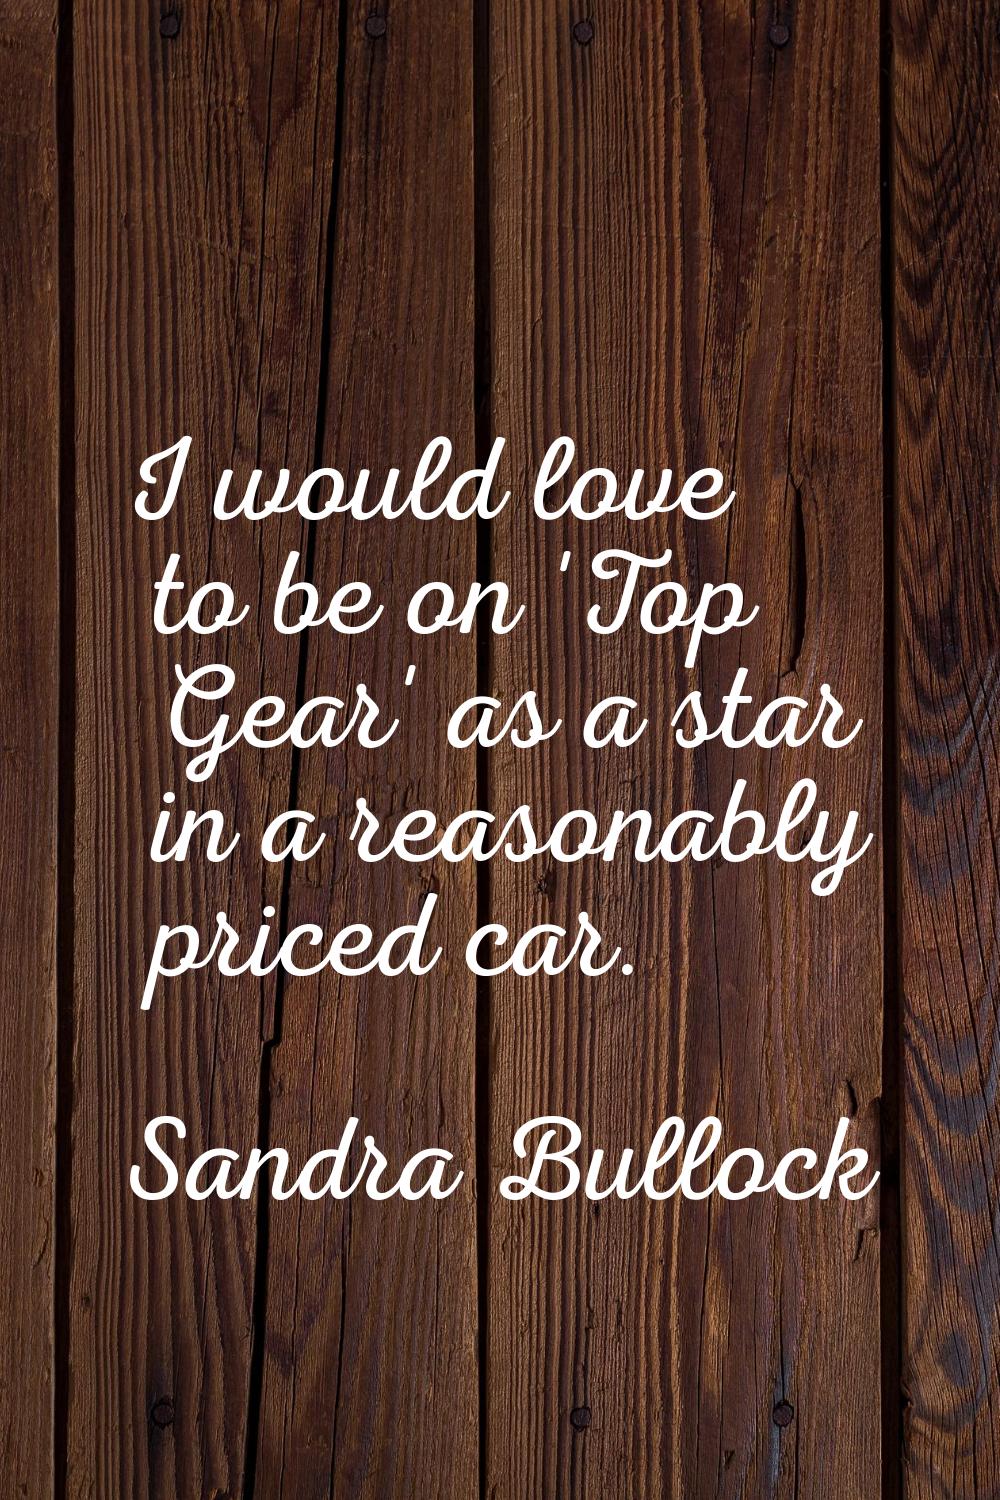 I would love to be on 'Top Gear' as a star in a reasonably priced car.